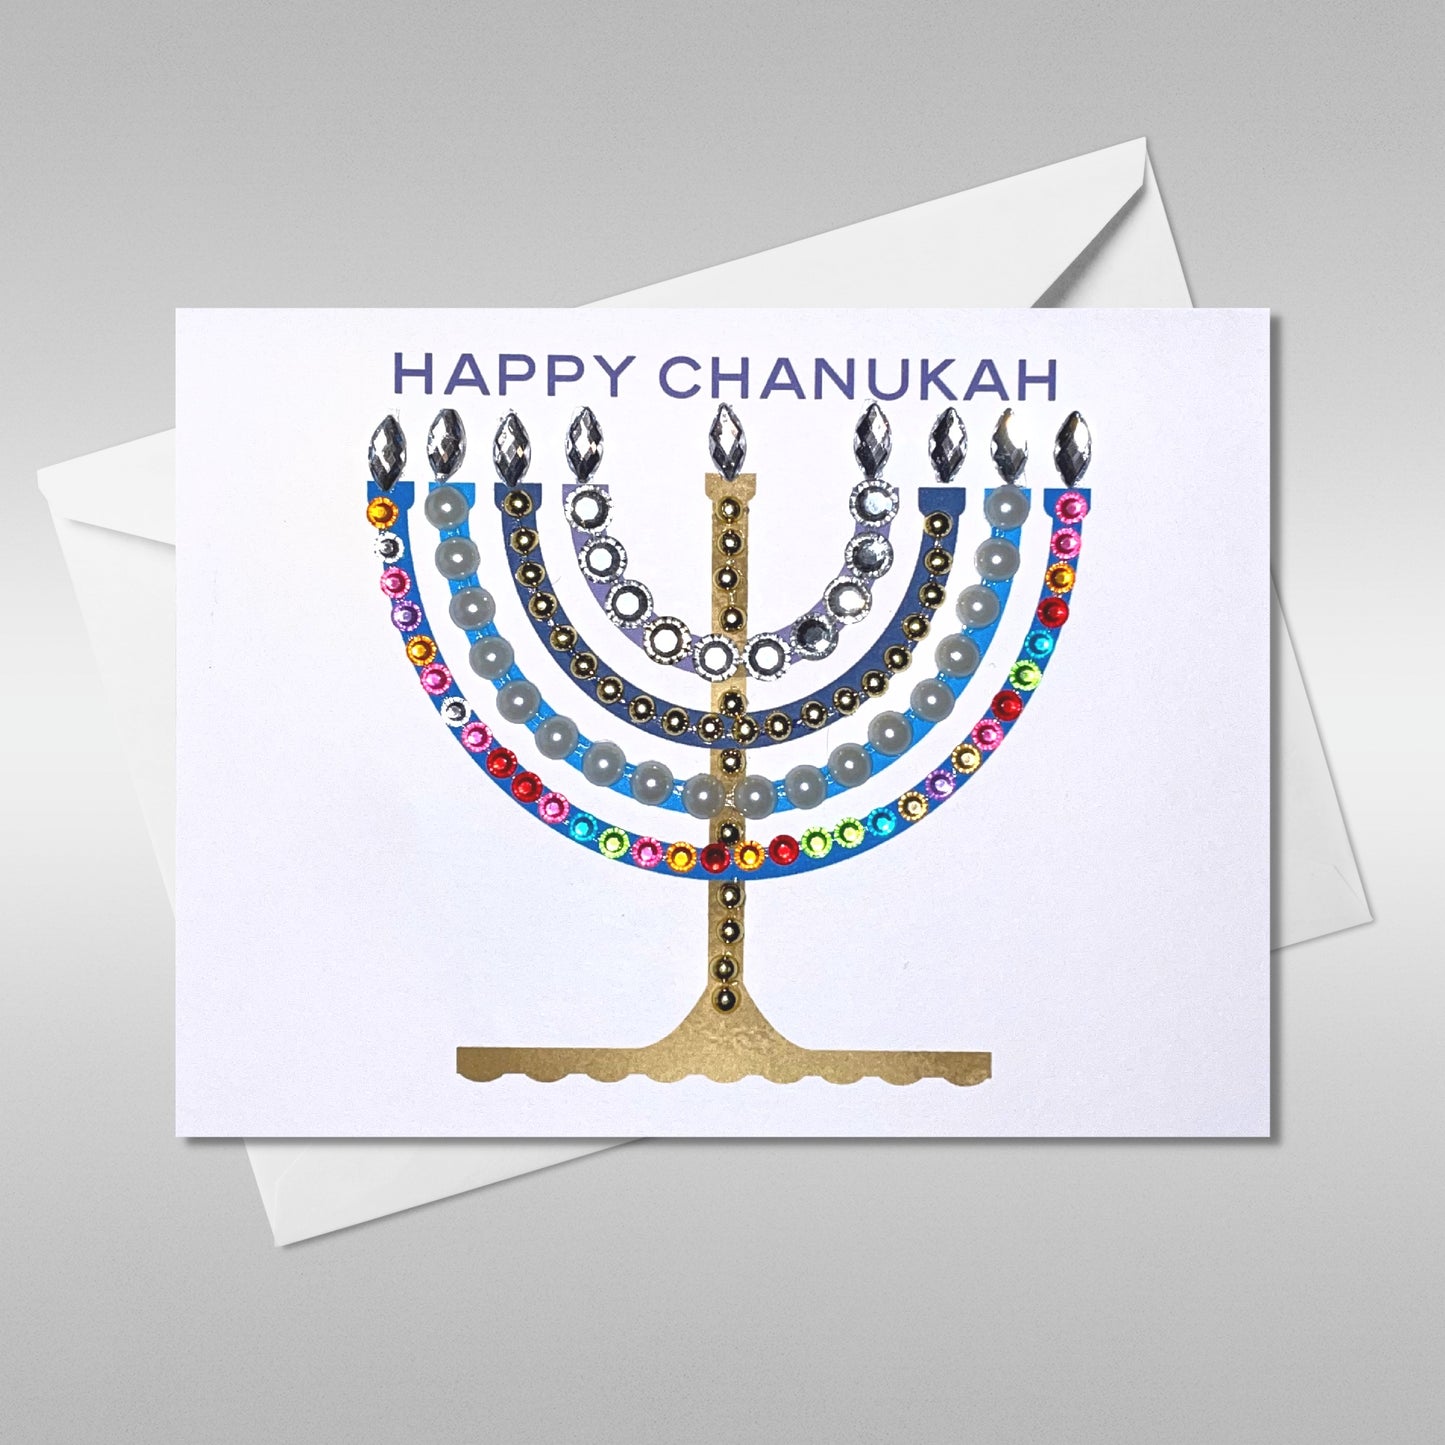 Happy Chanukah Greeting Card - Menorah